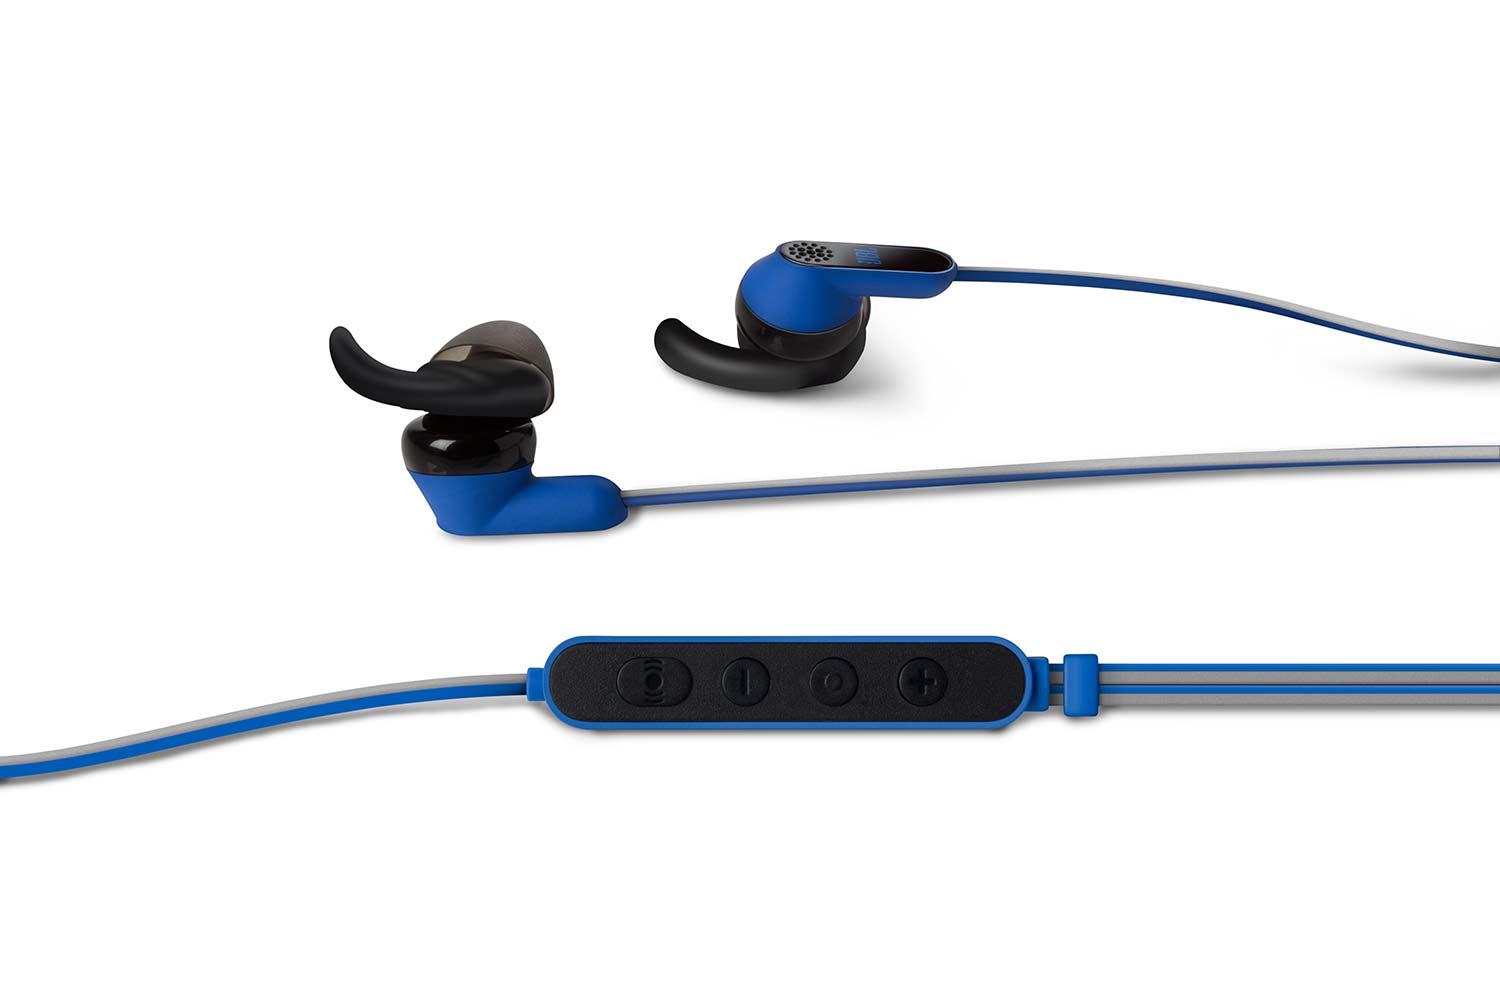 jbl new headphones ifa everest reflect grip noise cancelling bluetooth large mini bt blue 0971 hero